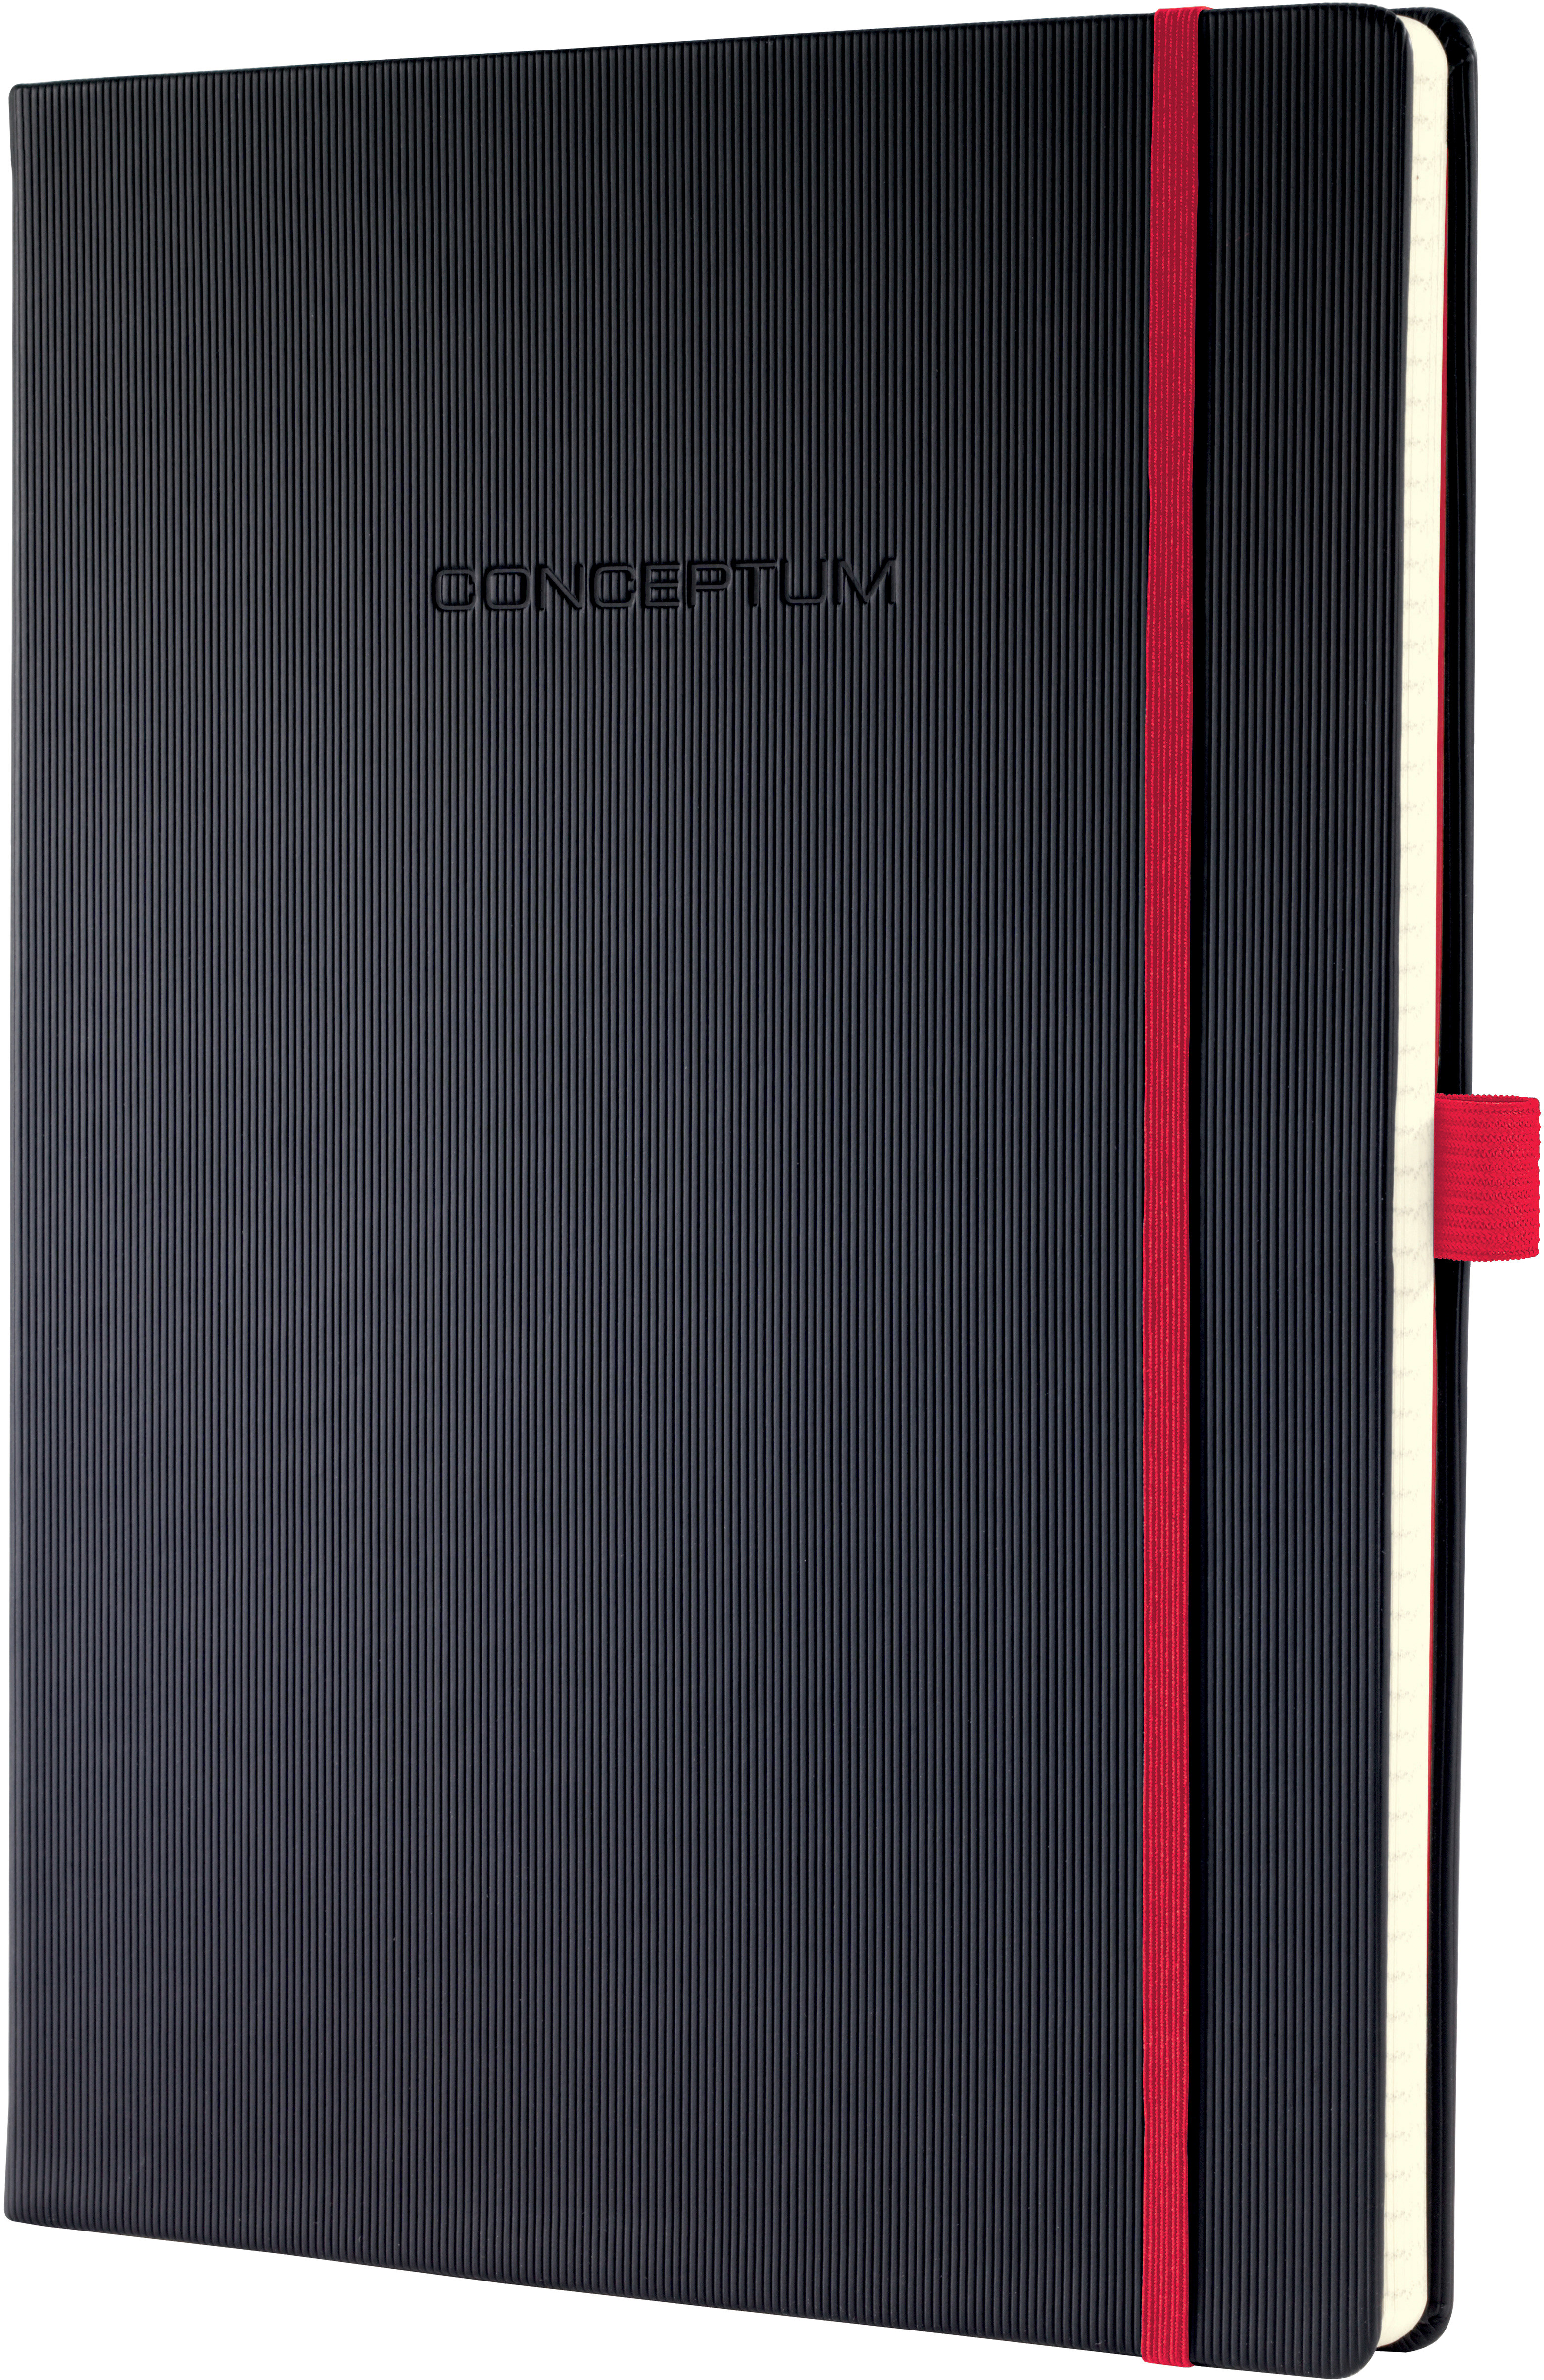 CONCEPTUM Red Edition, quadr. CO660 194S,80g,213x295x20mm 194S,80g,213x295x20mm